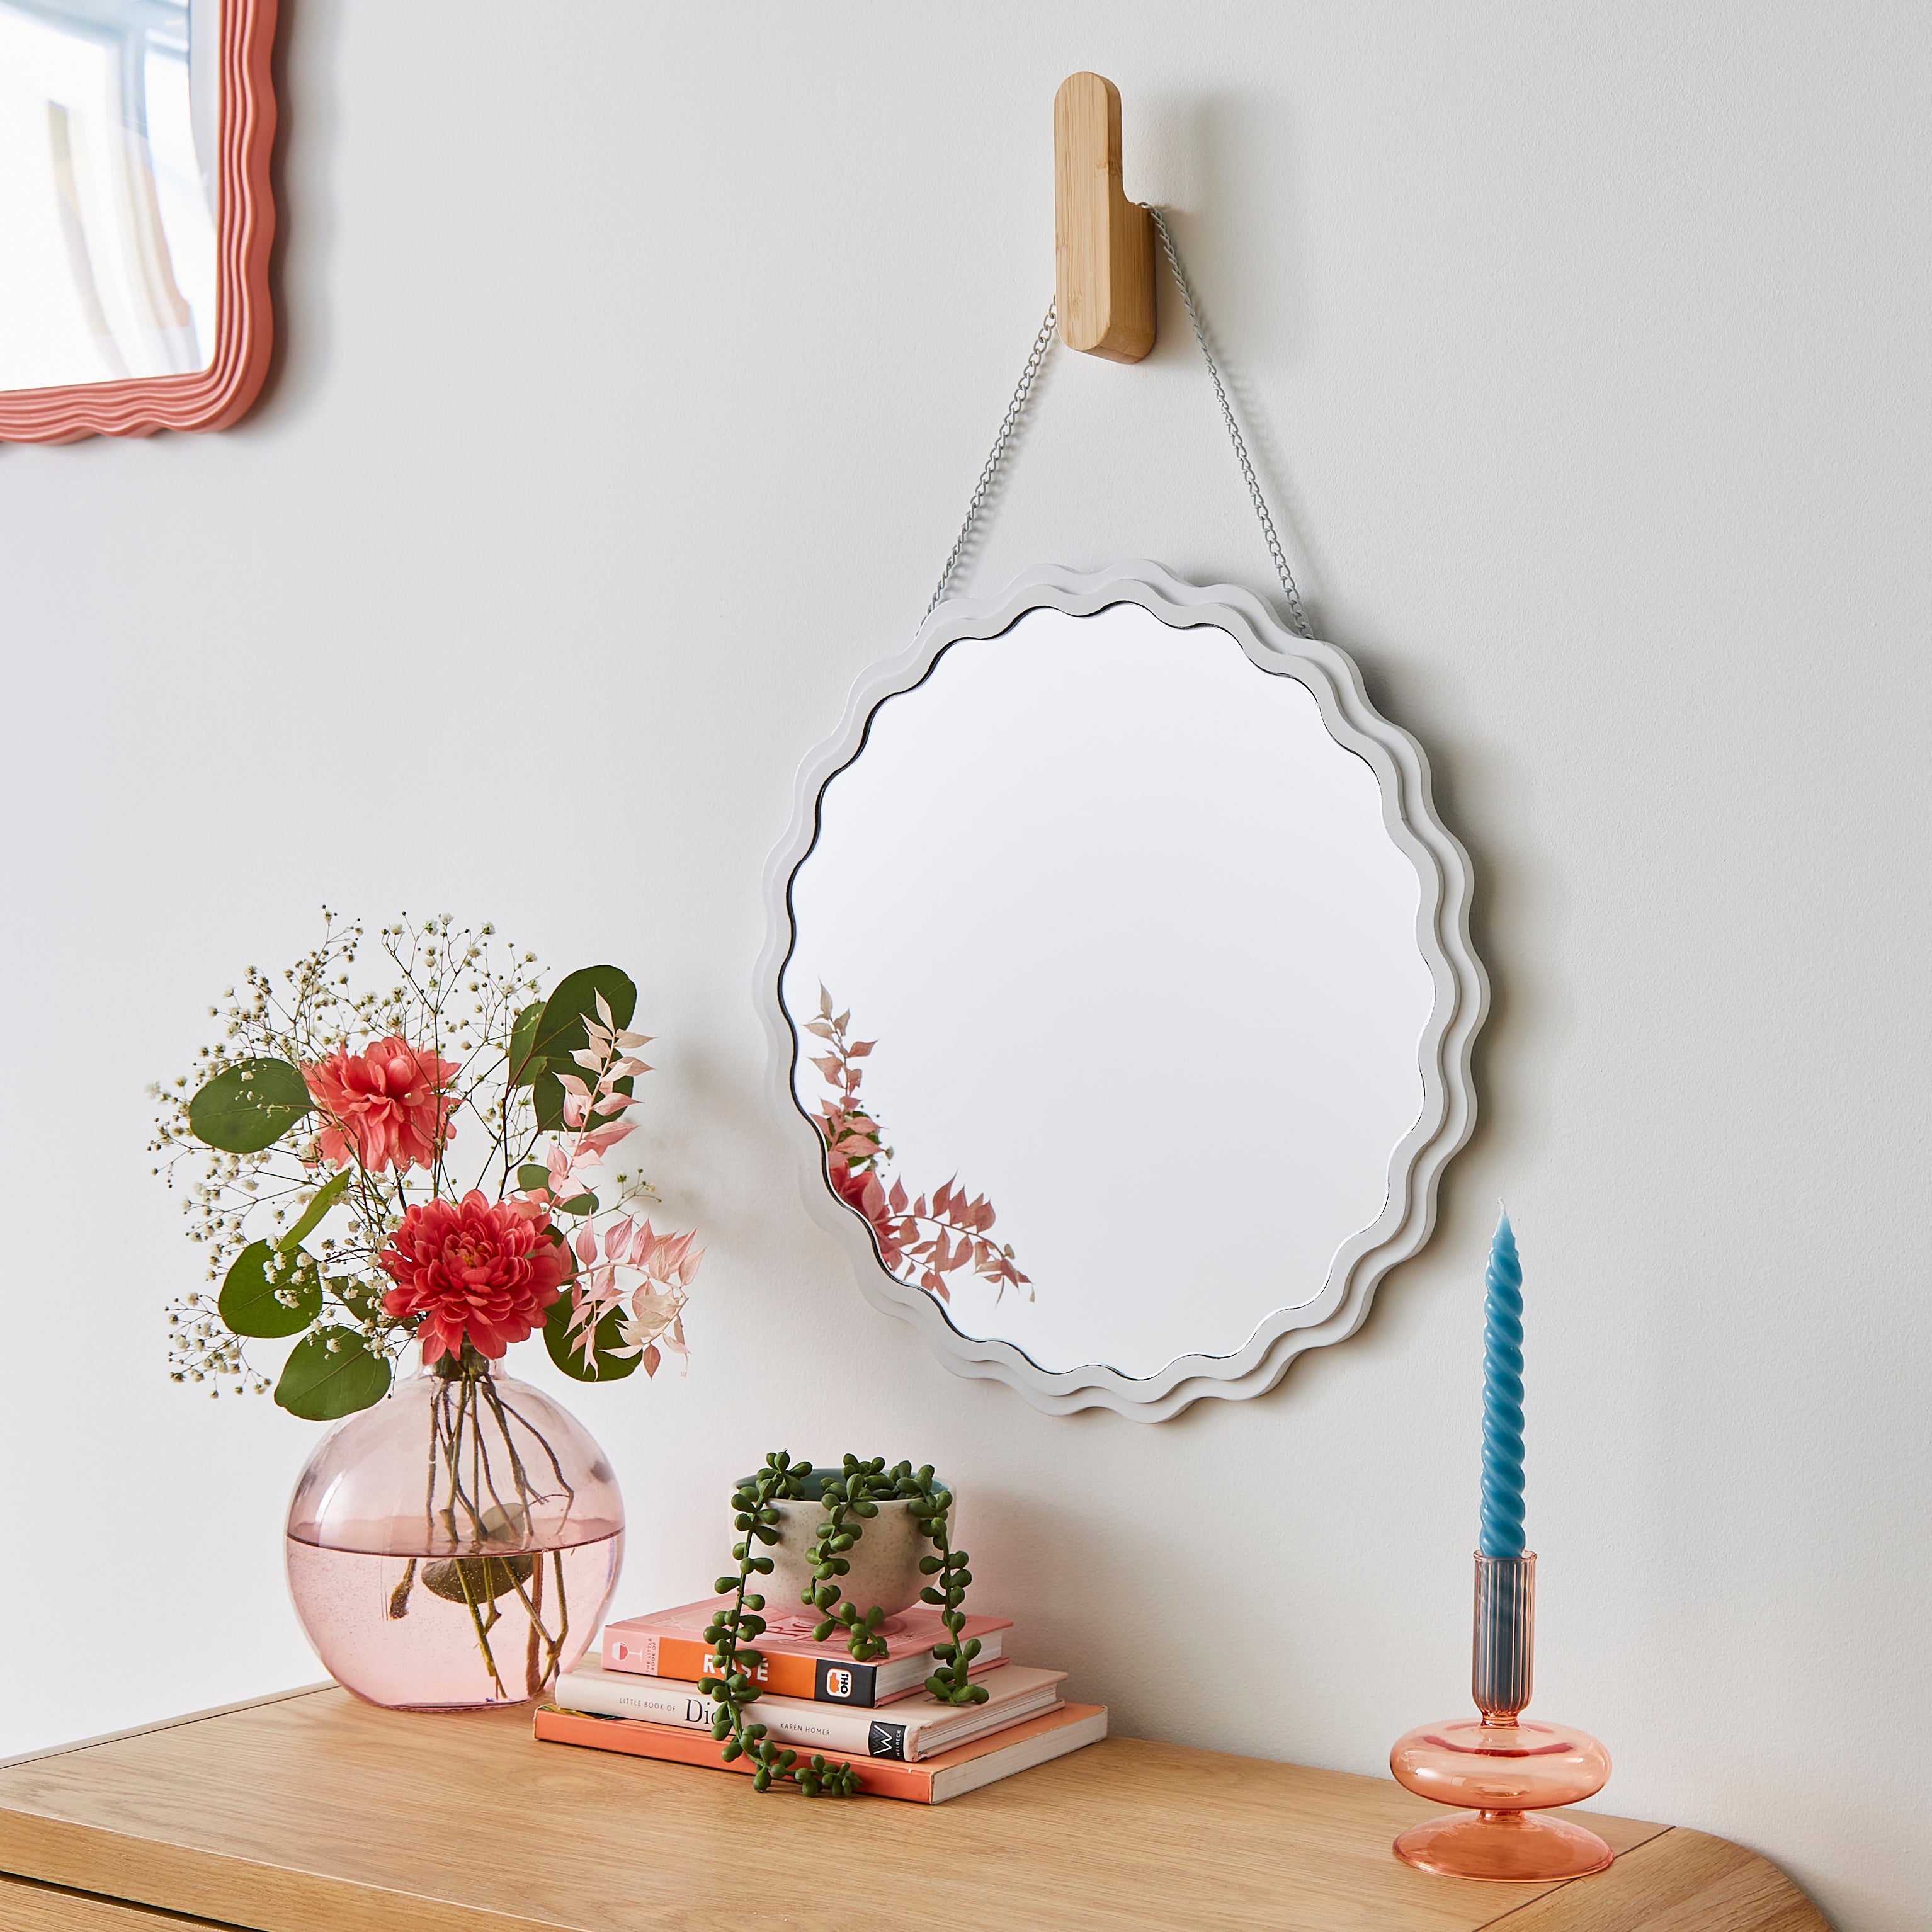 Wavy Round Hanging Wall Mirror